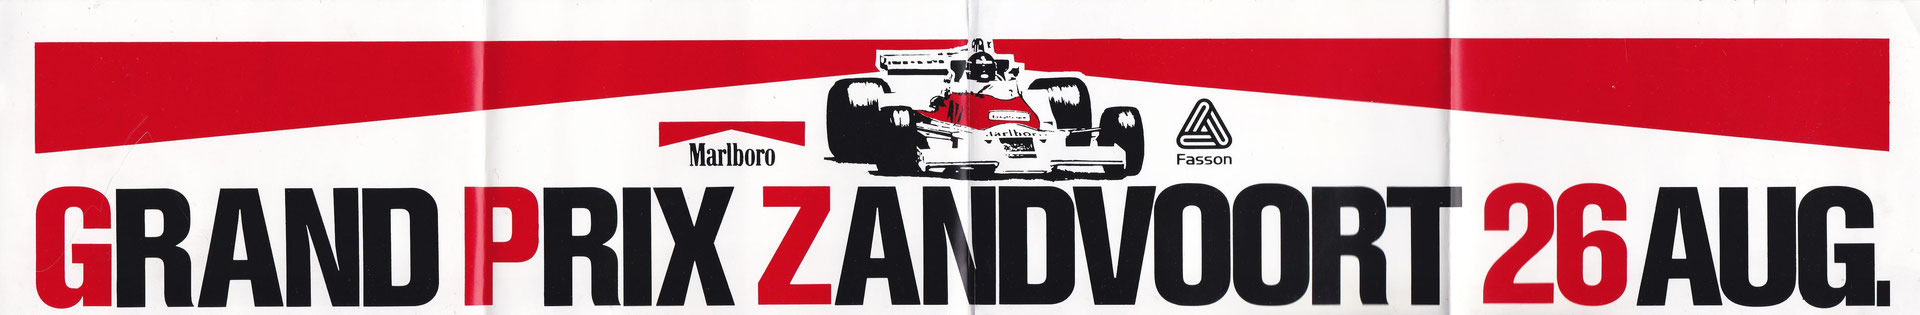 Sticker Grand Prix Formule 1 Zandvoort 1984.